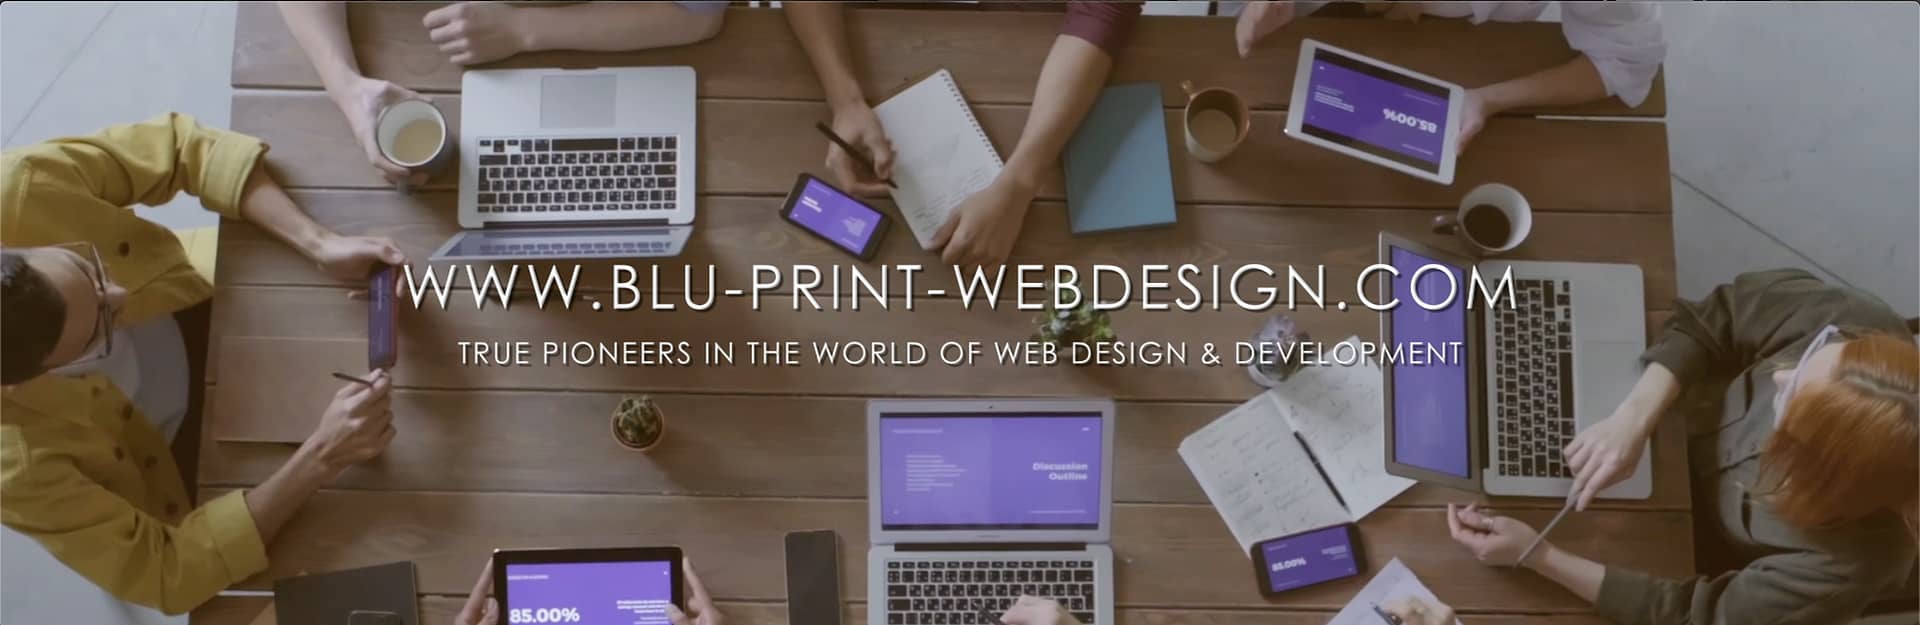 Blu Print Web Design